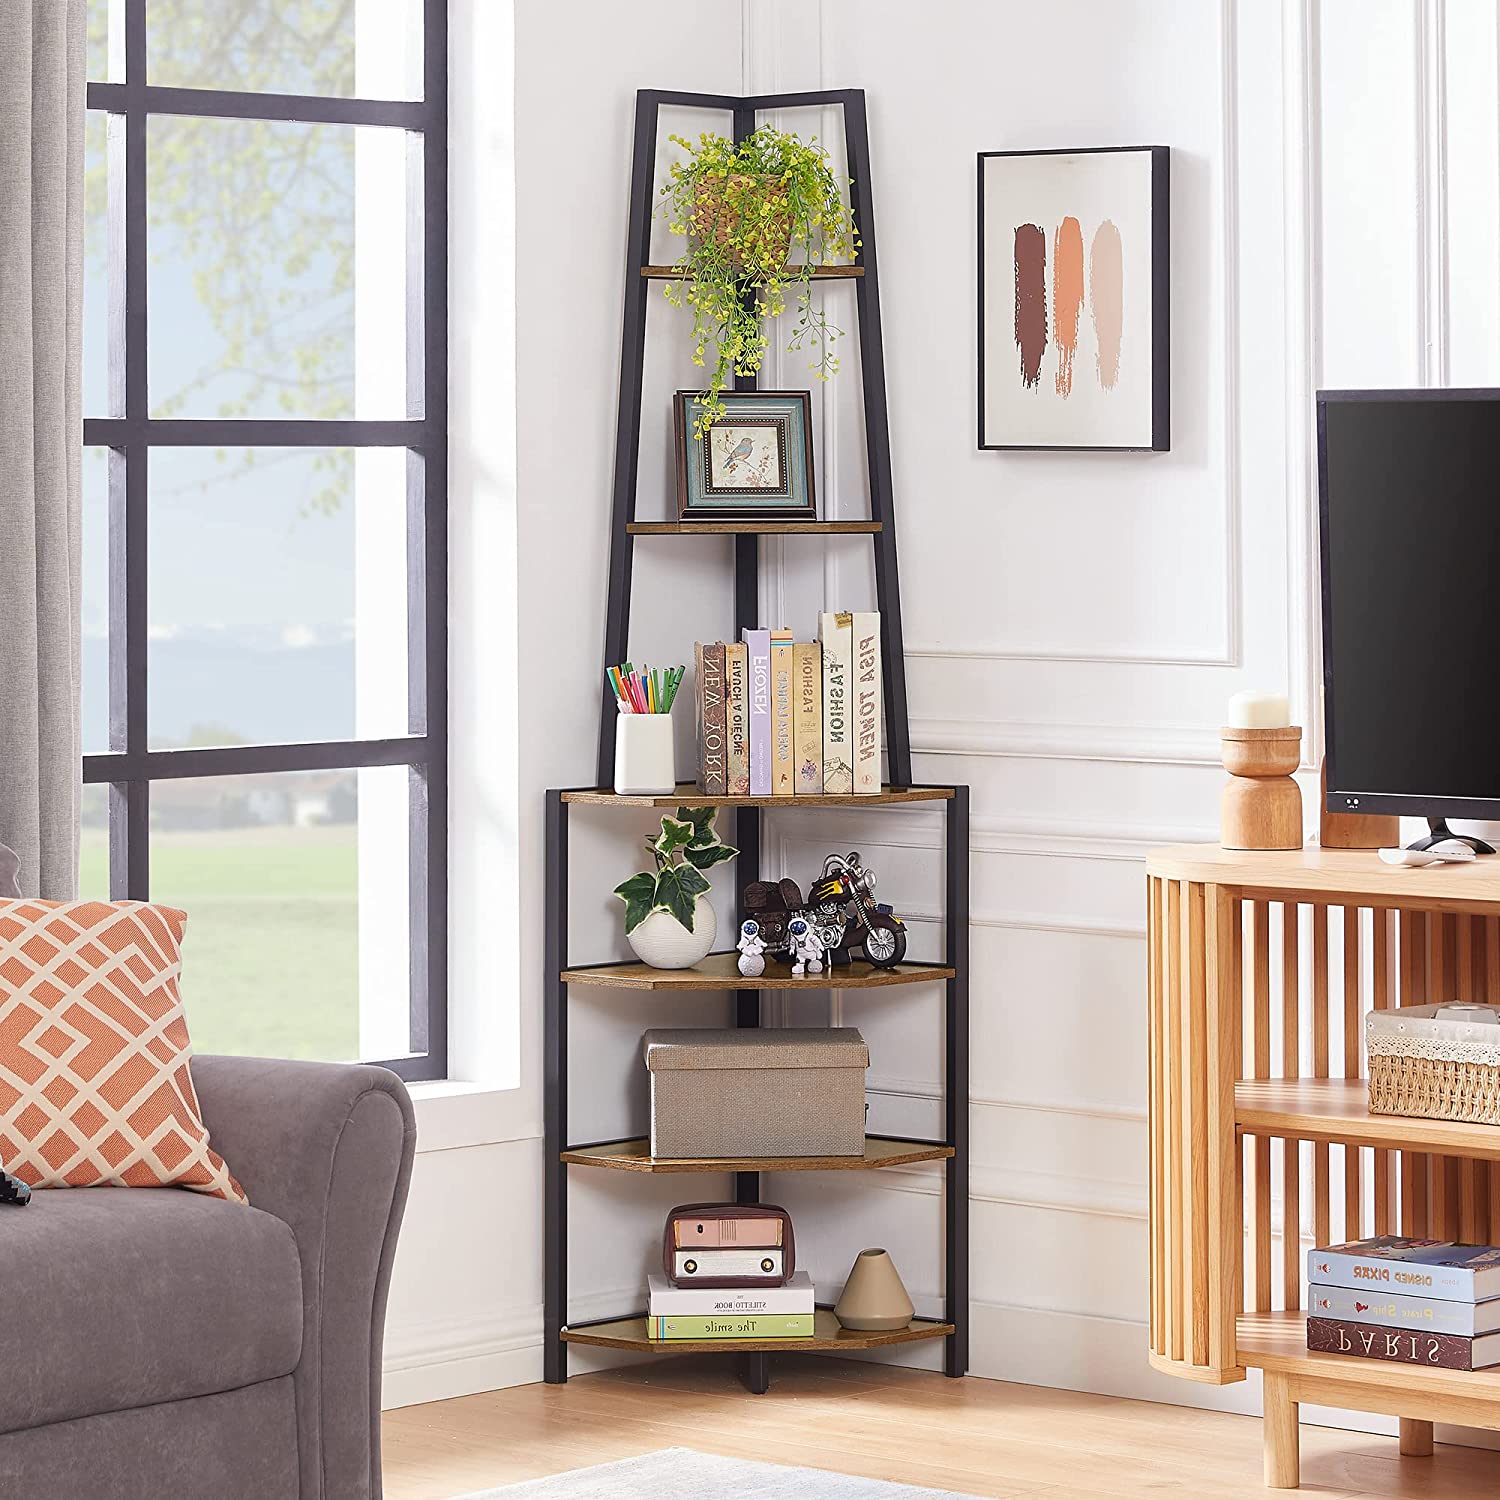 VECELO 6 Tier Corner Shelf, 69 Inch Industrial Bookshelf/Storage Stand with Metal Framefor Living Room, Bedroom, Home Office